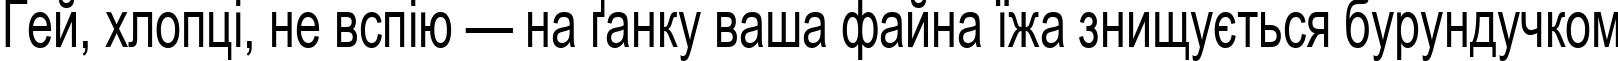 Пример написания шрифтом Arial70n текста на украинском